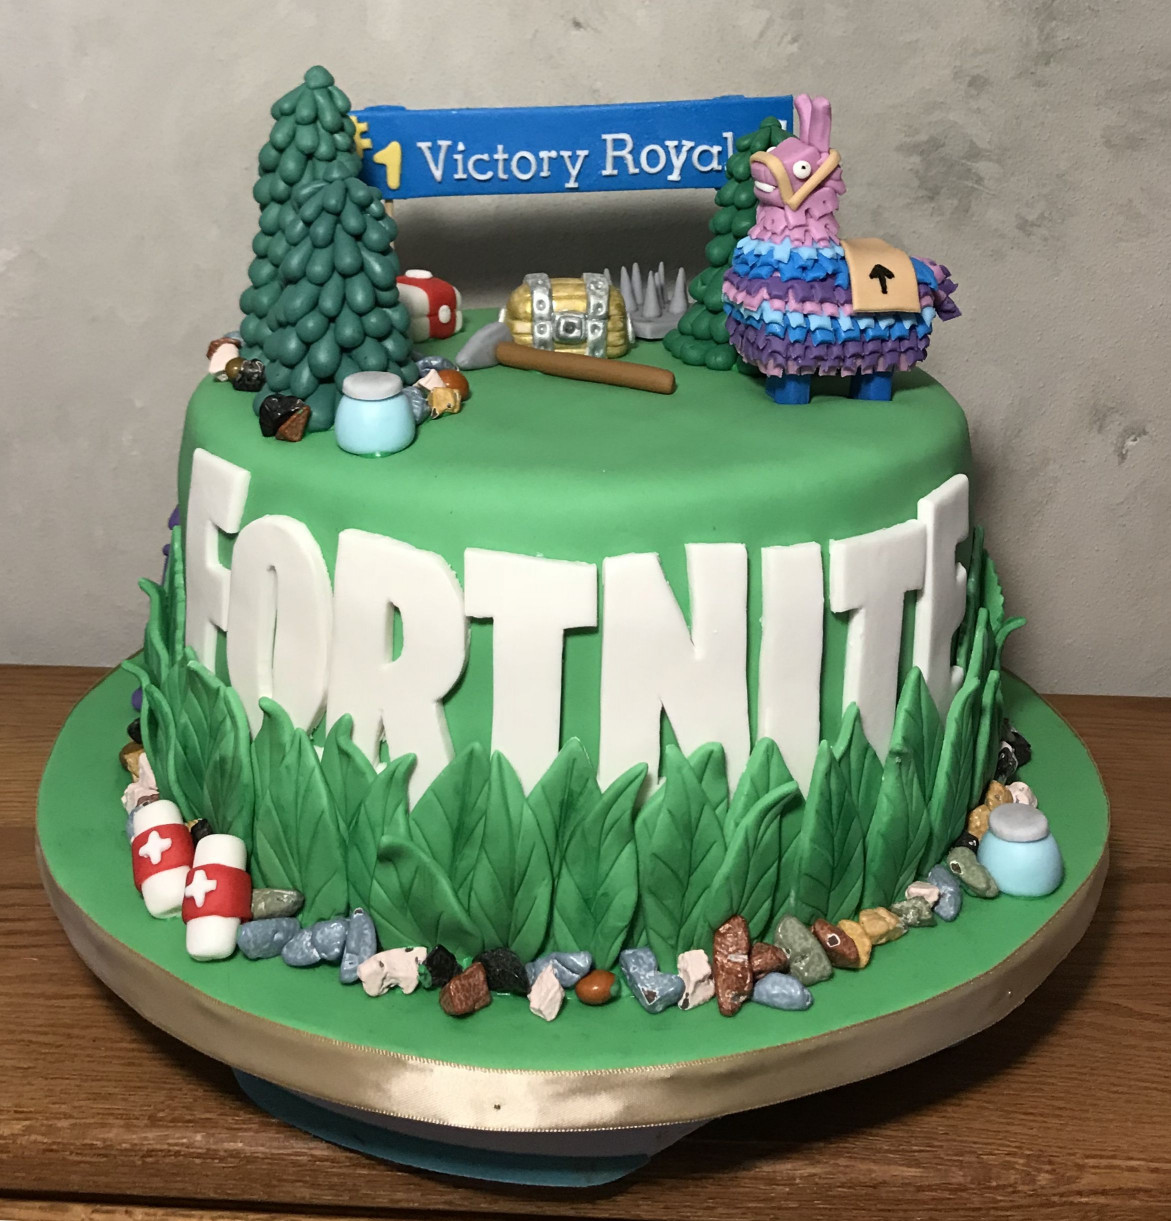 Fortnite Birthday Cake
 Fortnite cake Cakes by Carrie in 2019